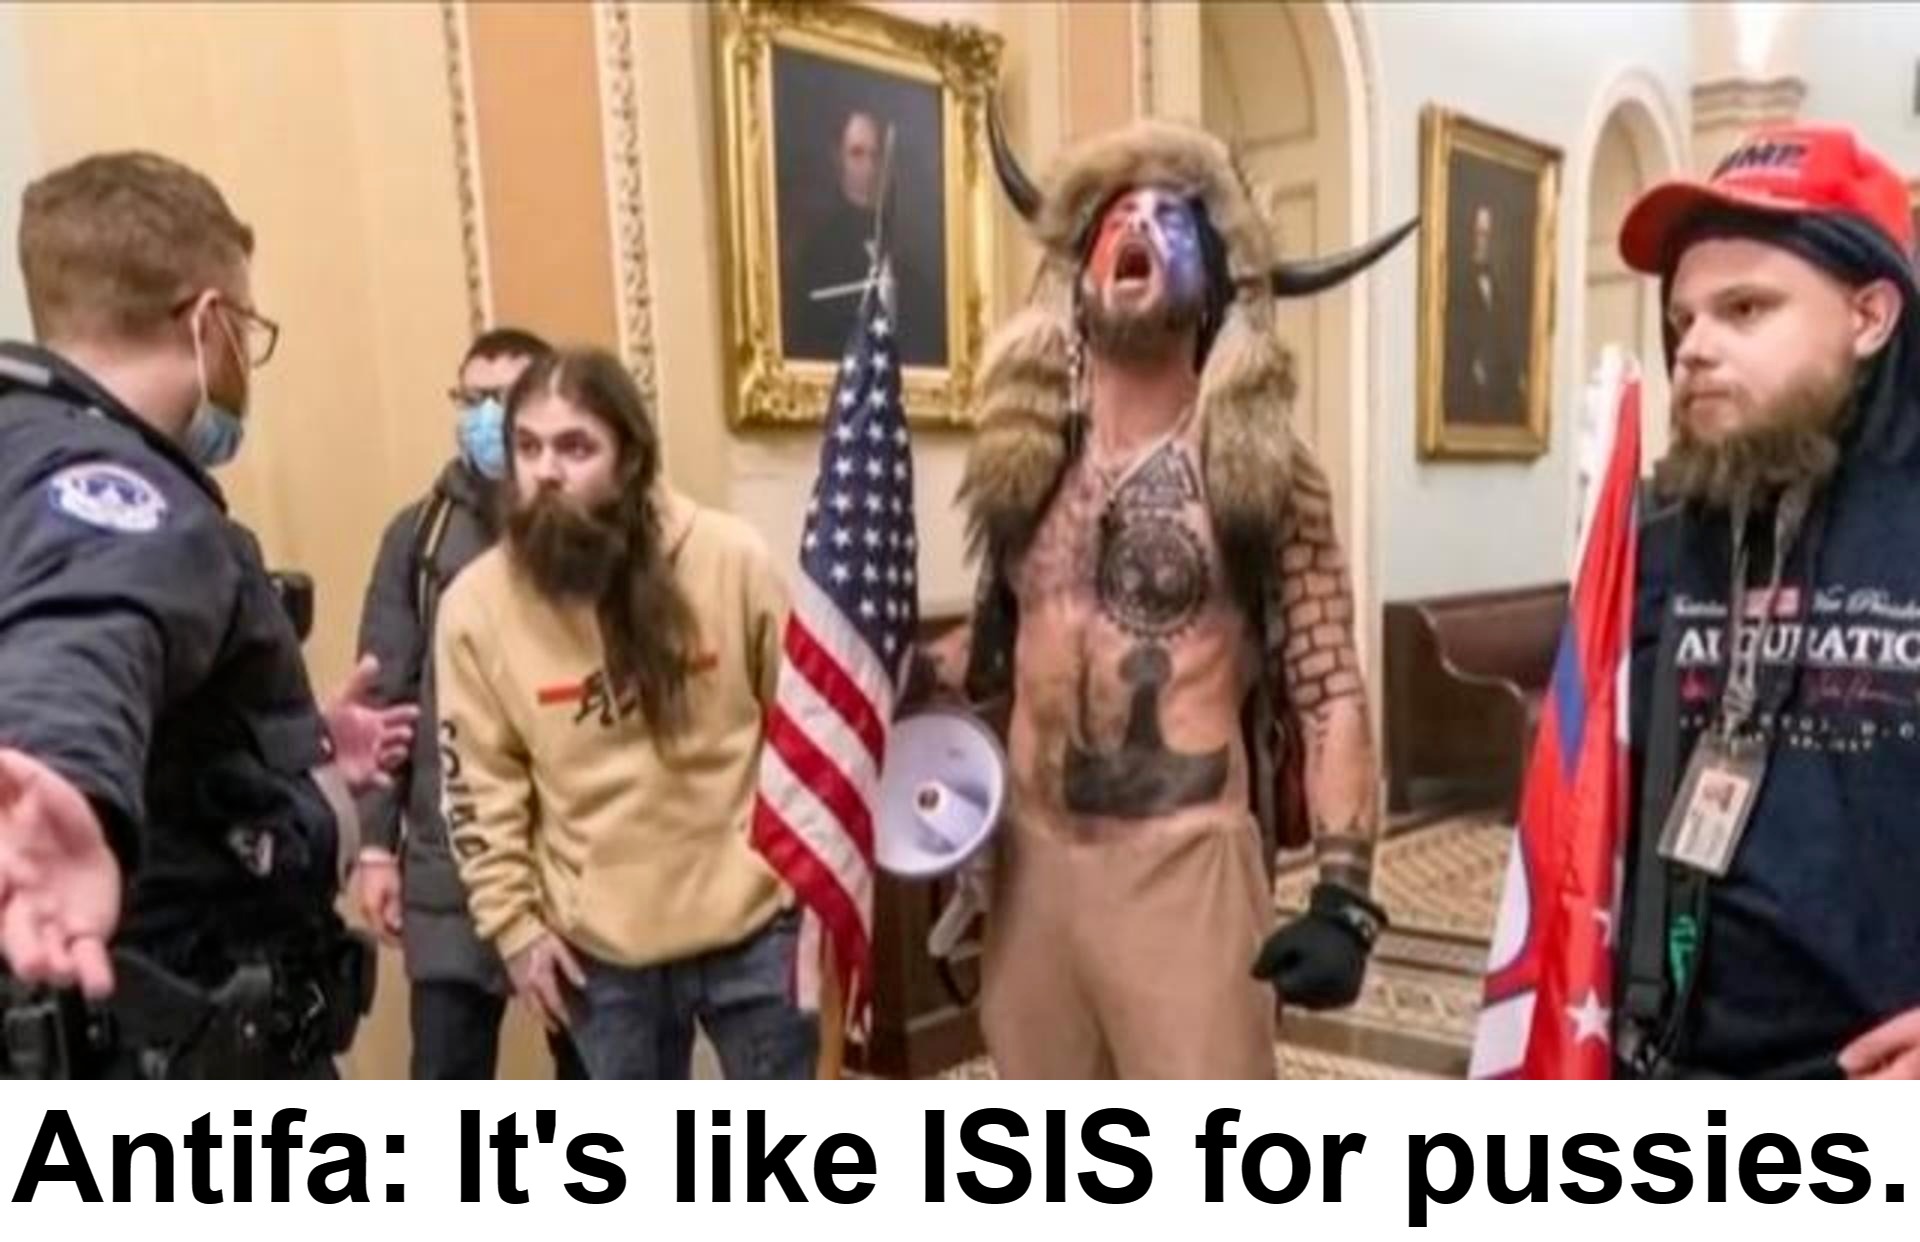 Antifa: It's like ISIS for pussies. | Antifa: It's like ISIS for pussies. | image tagged in antifa,isis,pussies,sjw triggered,angry sjw,sjws | made w/ Imgflip meme maker